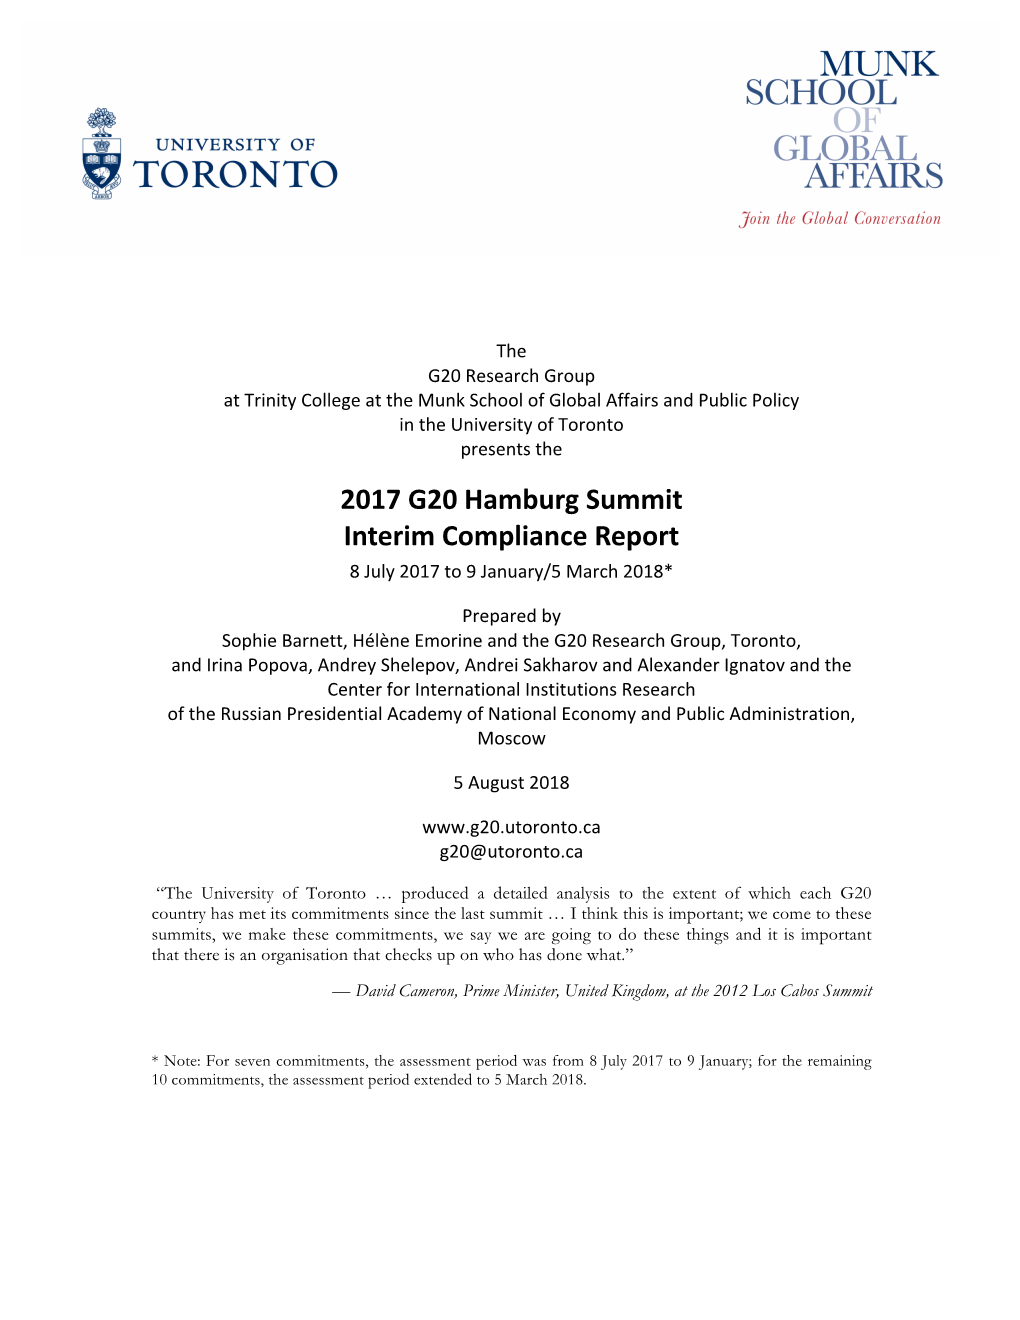 2017 G20 Hamburg Summit Interim Compliance Report 8 July 2017 to 9 January/5 March 2018*